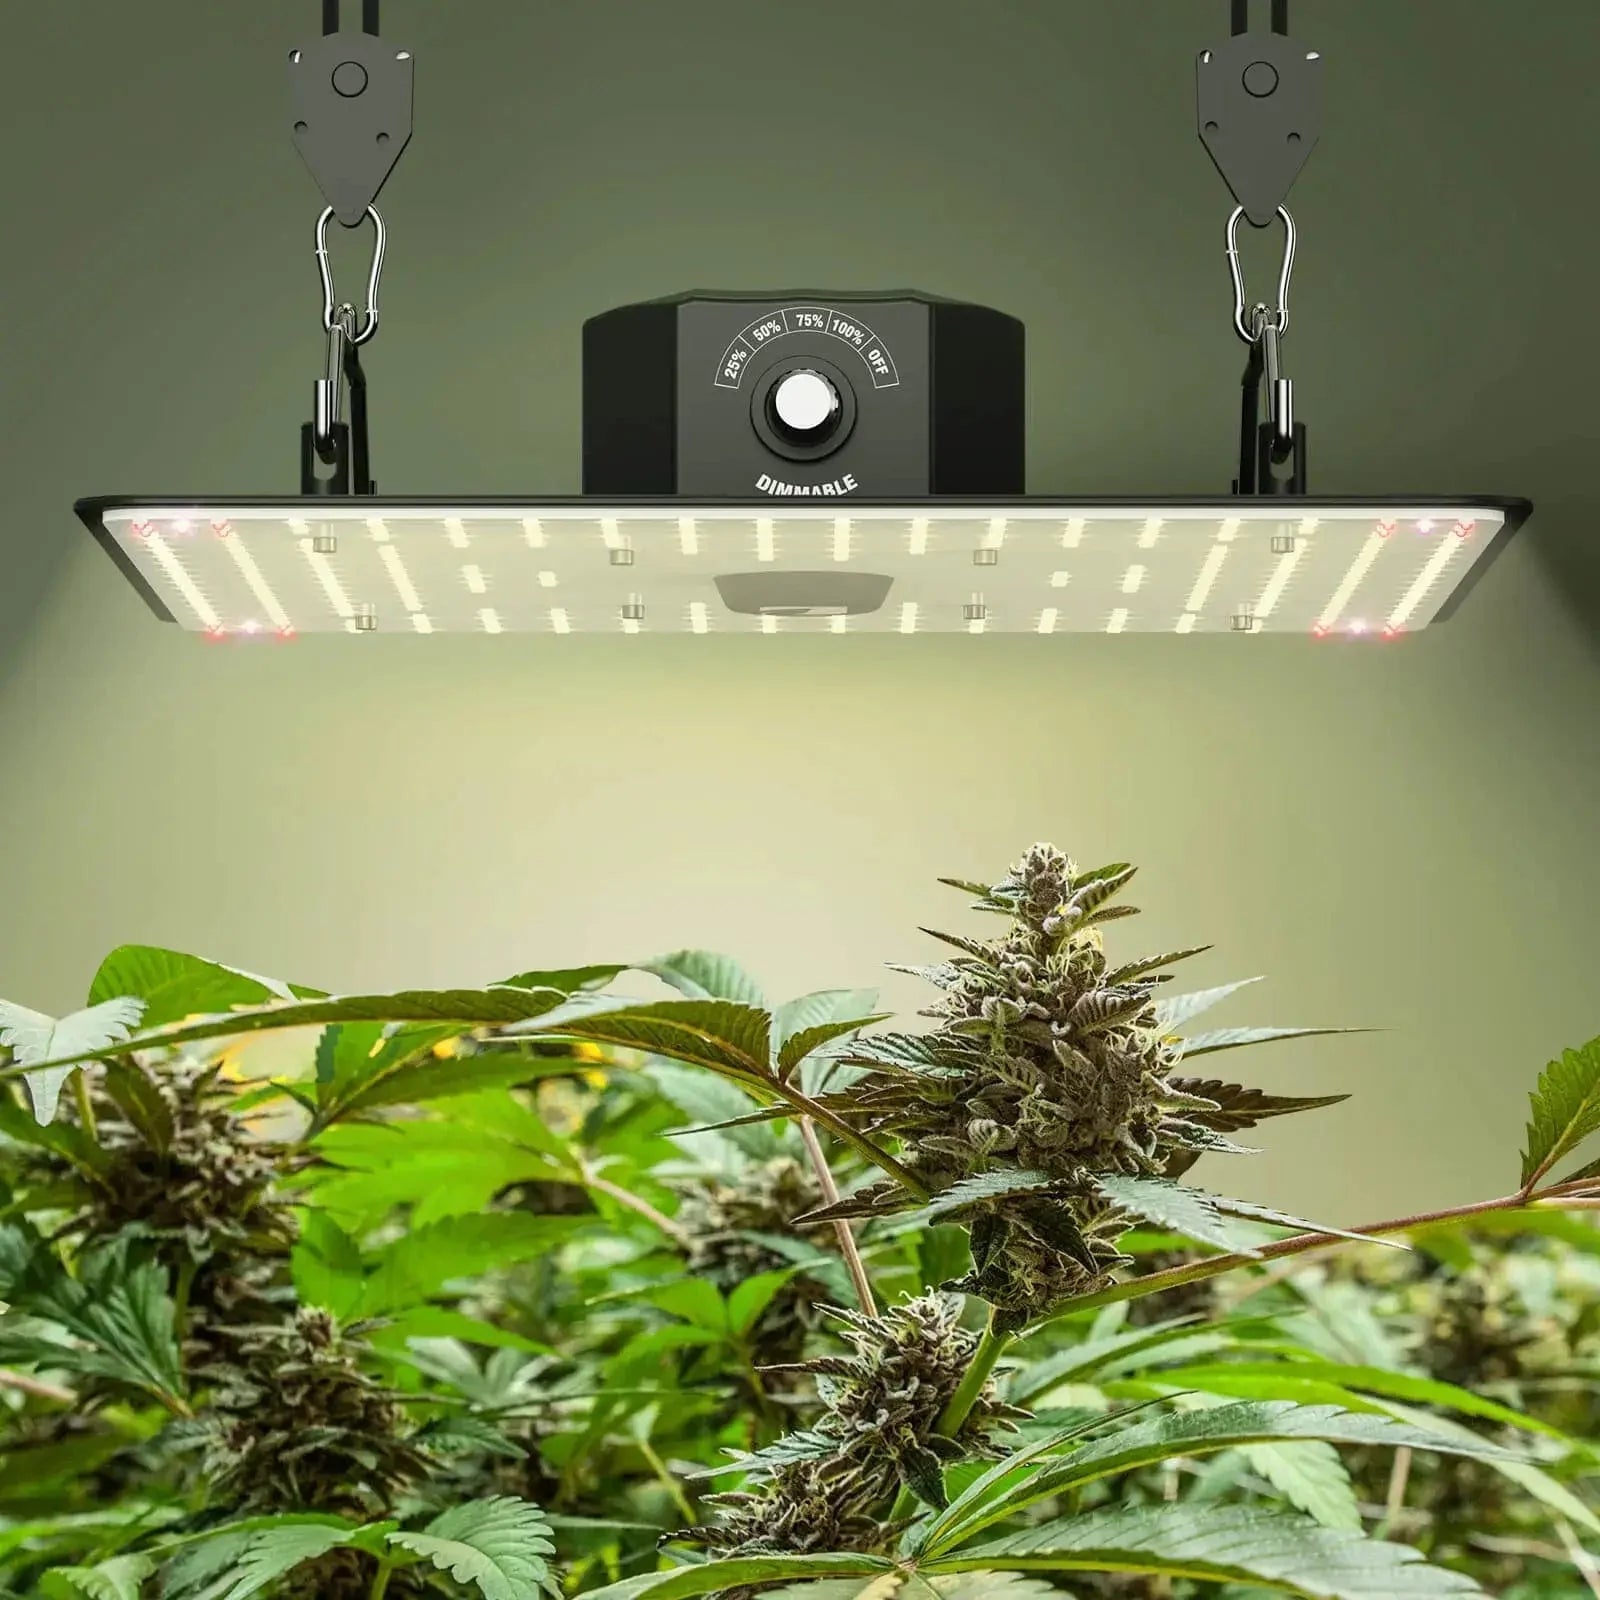 JAMSUNG-150W SD-X3 LED Plant Grow Light - 5 Packs